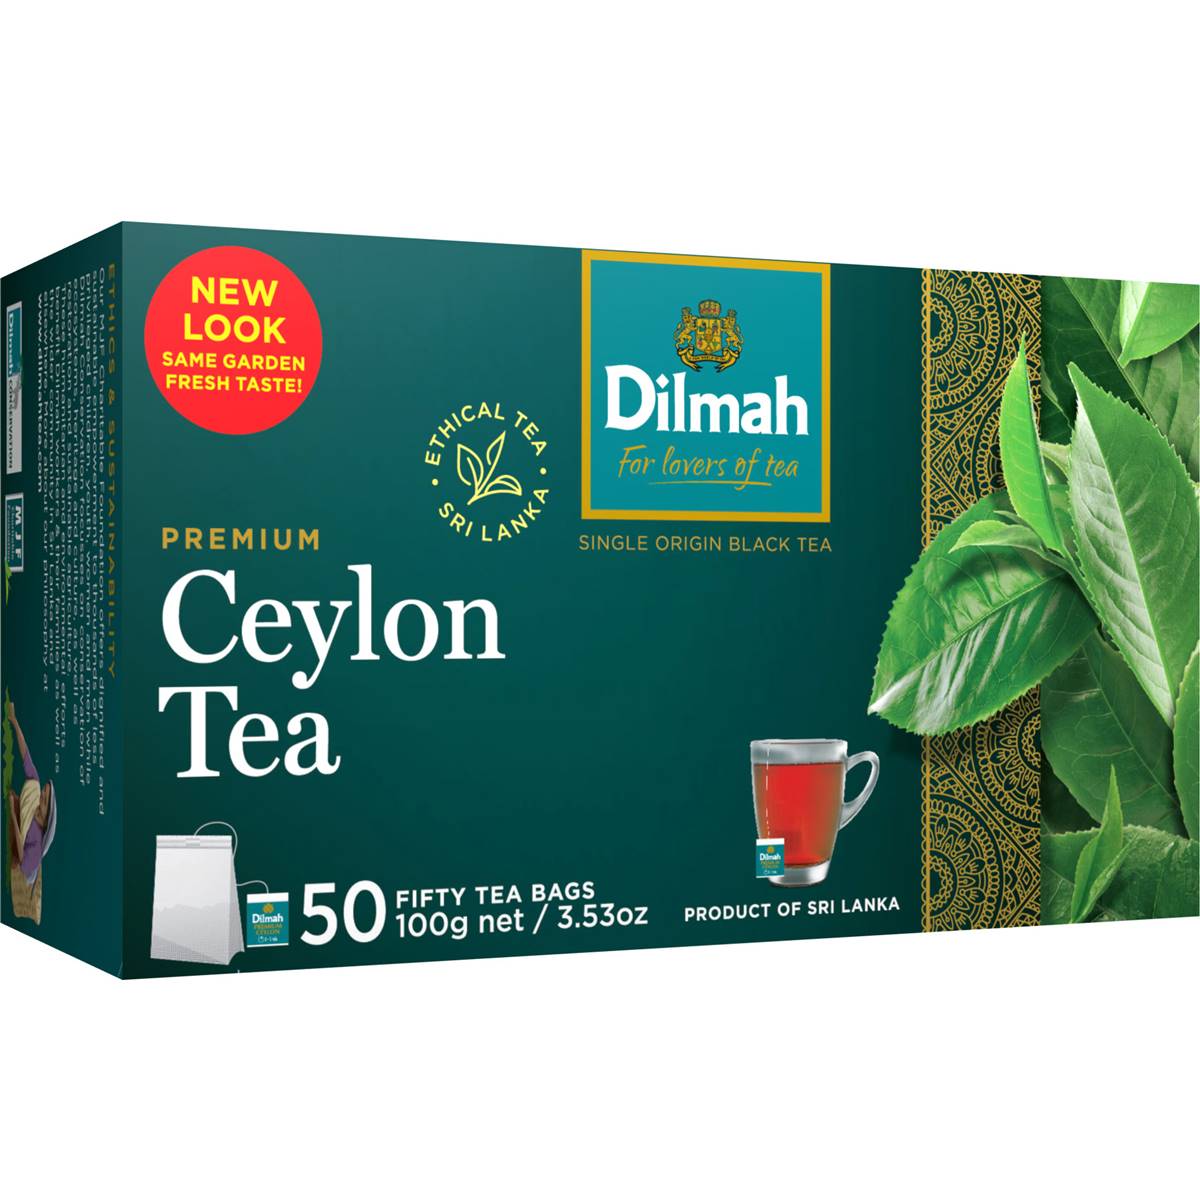 Calories in Dilmah Ceylon Tea Bags